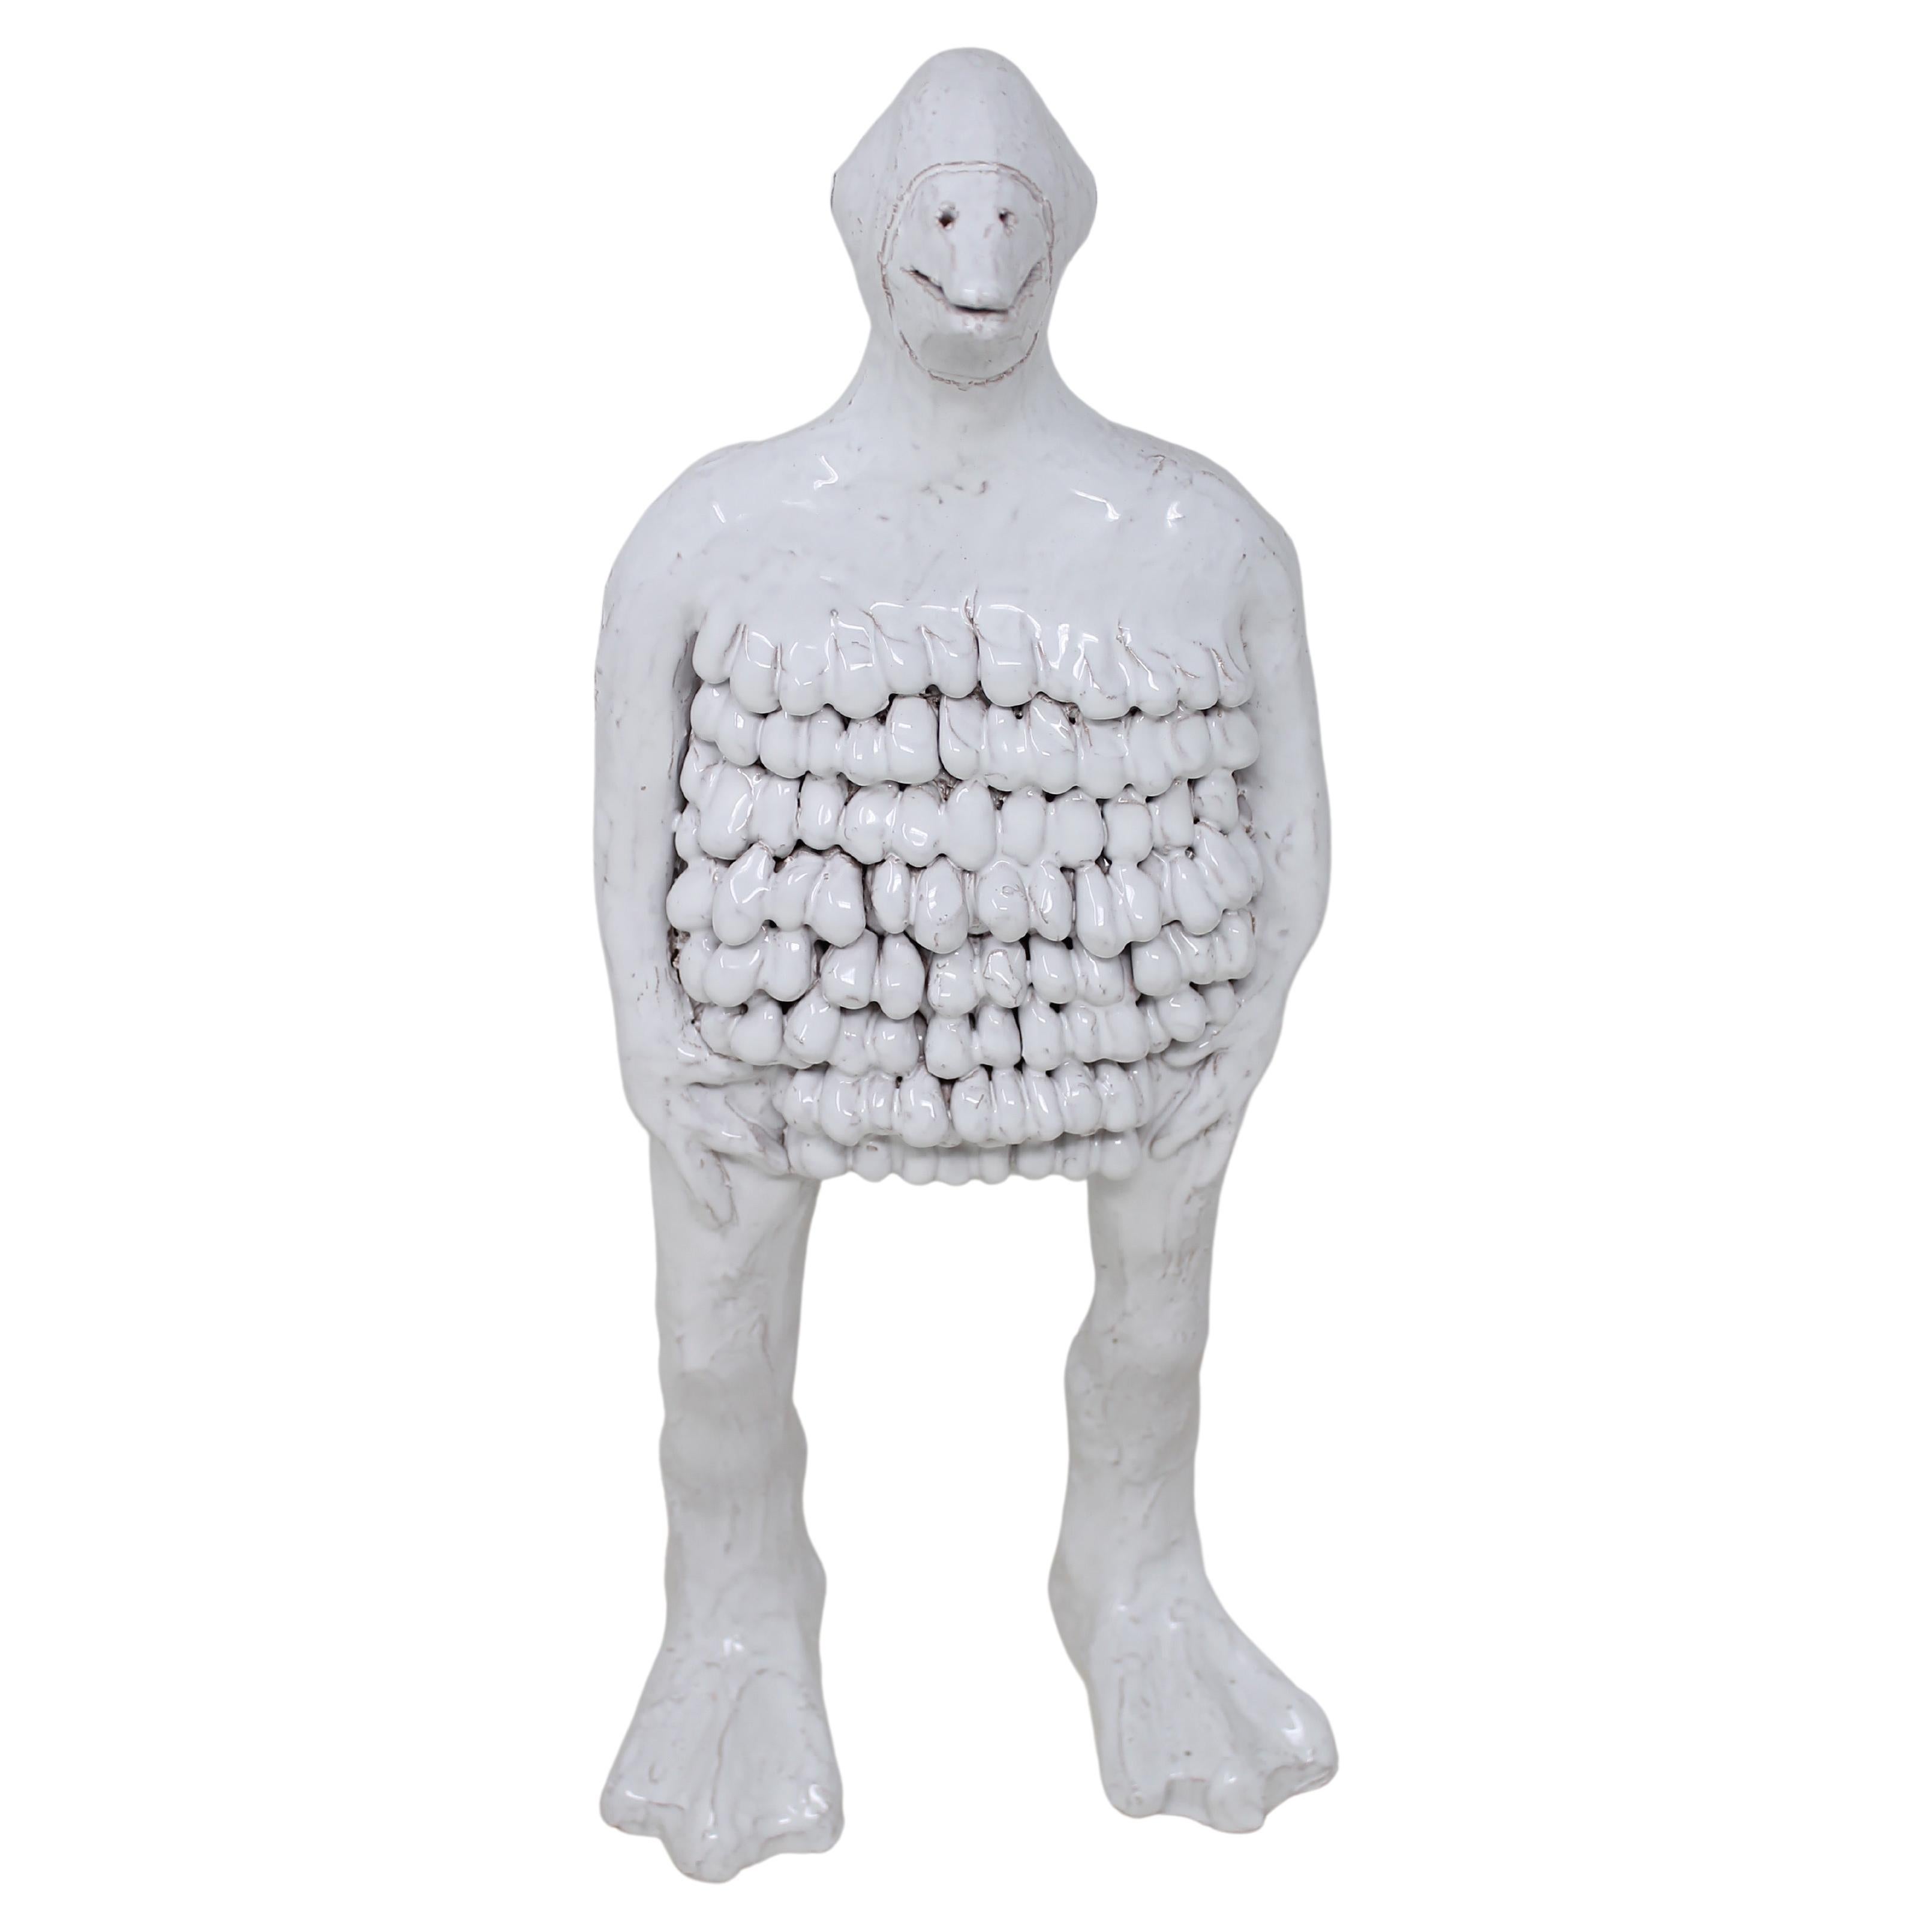 Freaklab Big Humans Made Entirely by Hand in Ceramic, Man-Woman Bird